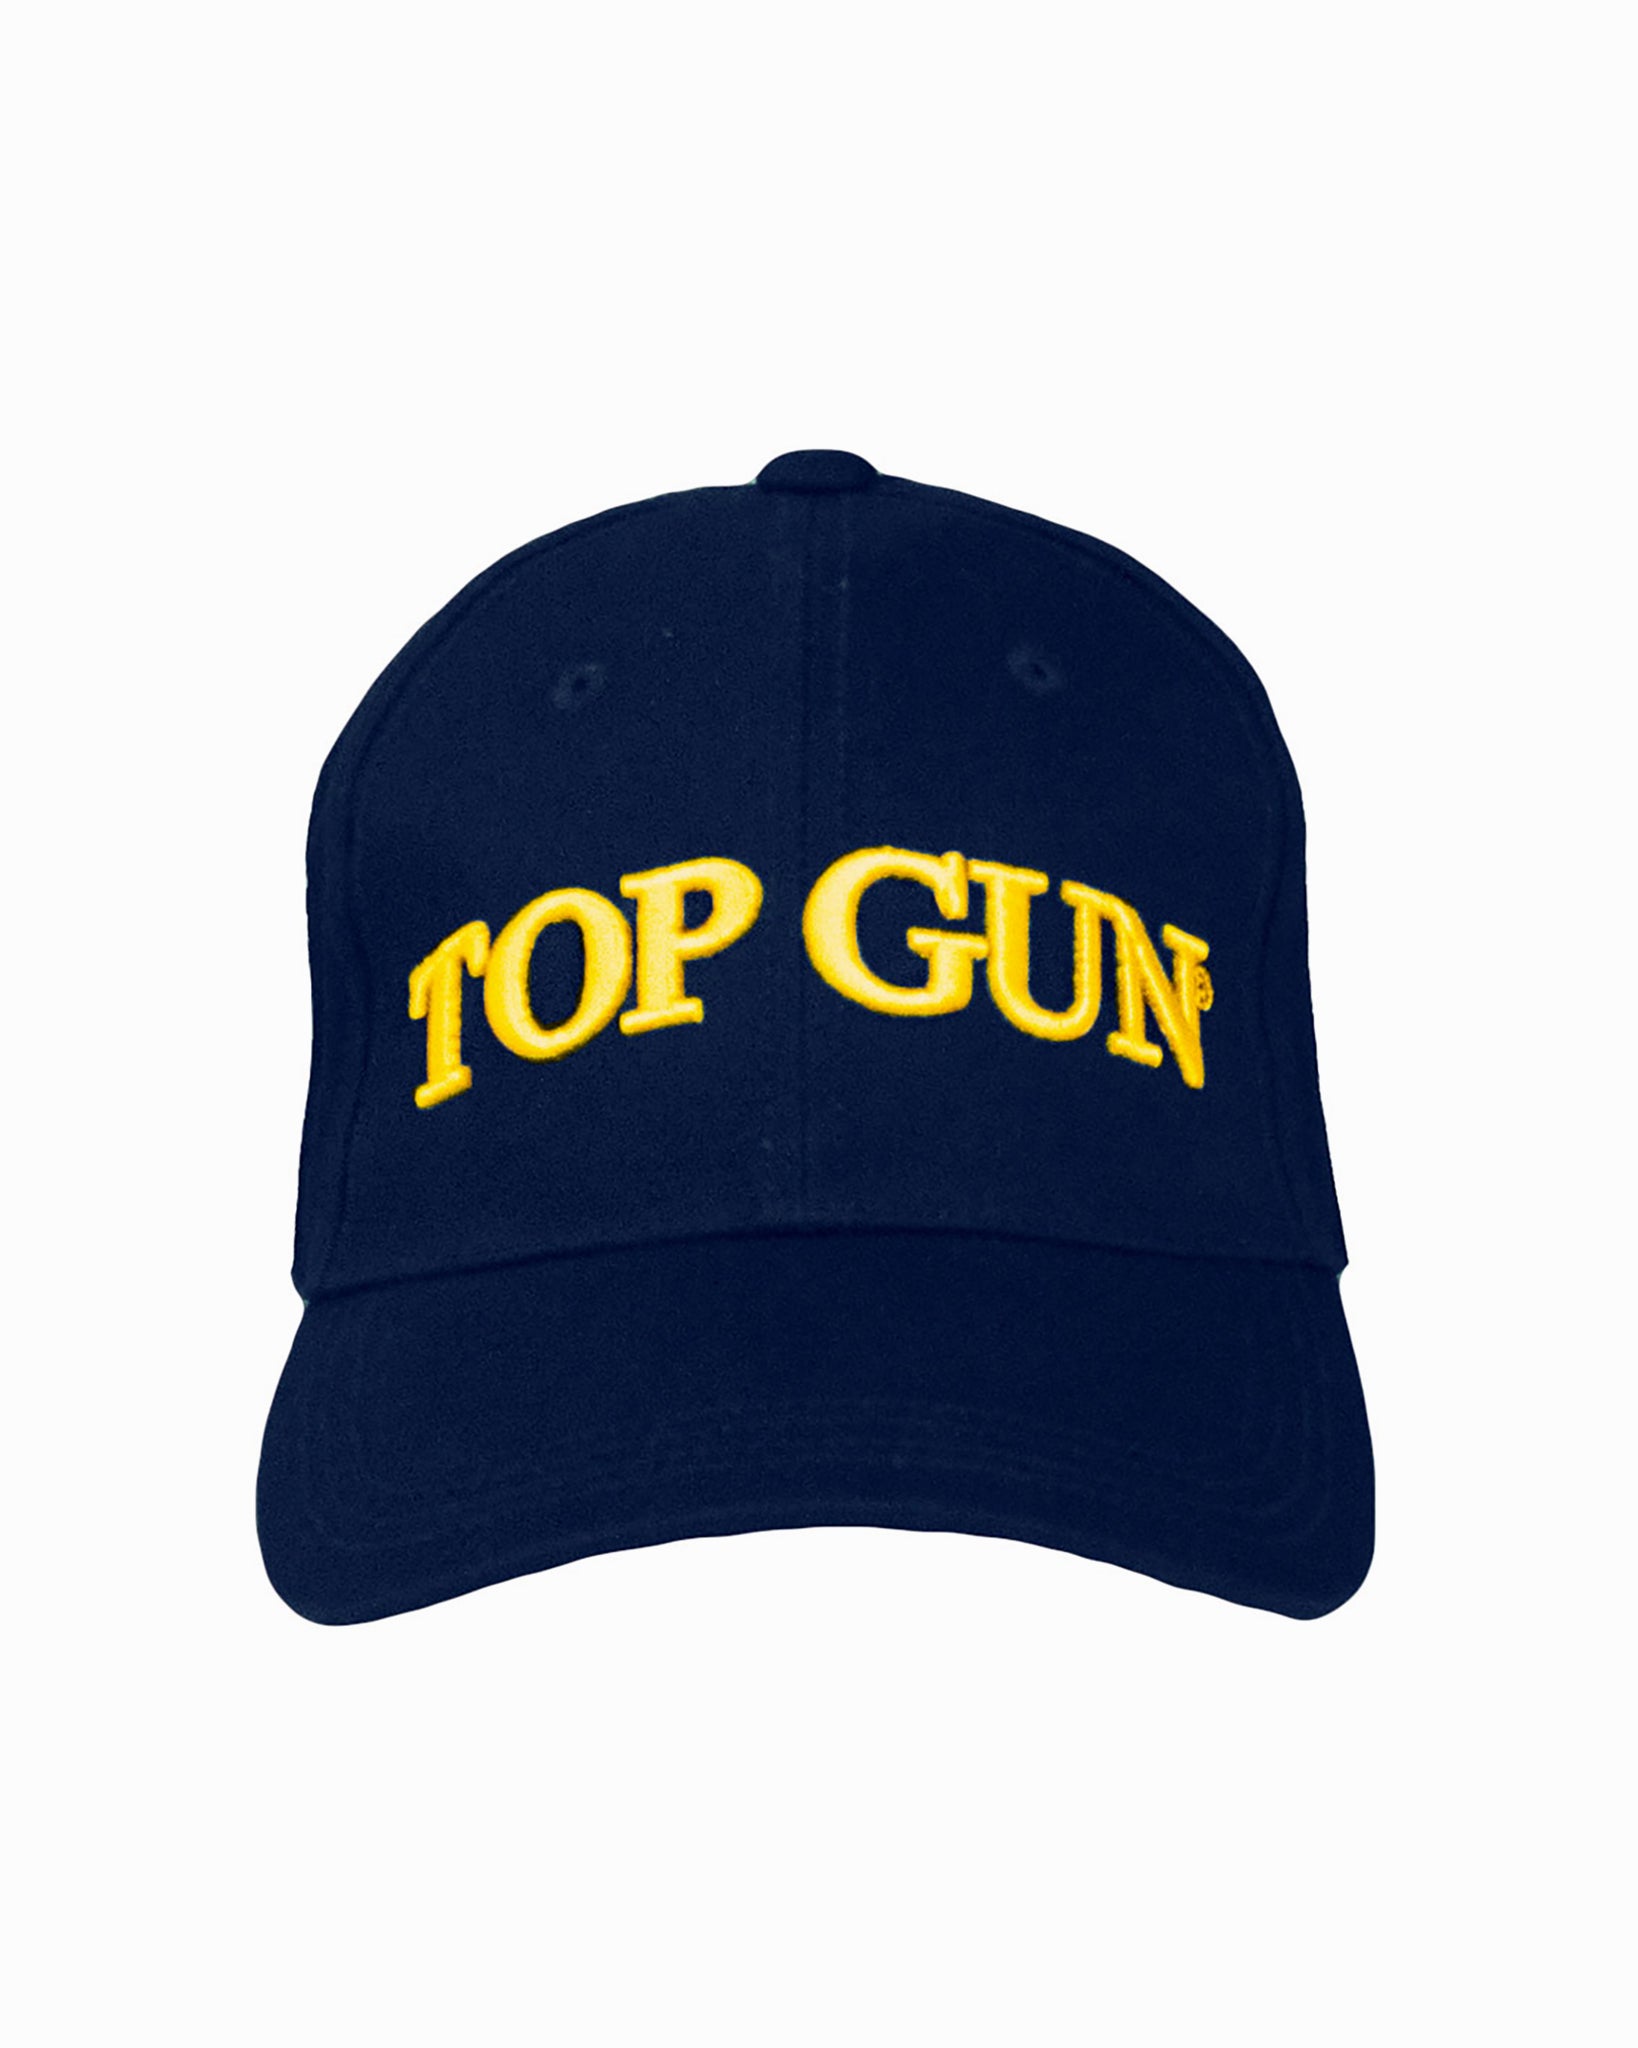 Top Gun: Maverick Accessories | Official Store | Cap, Backpack, Mugs ...